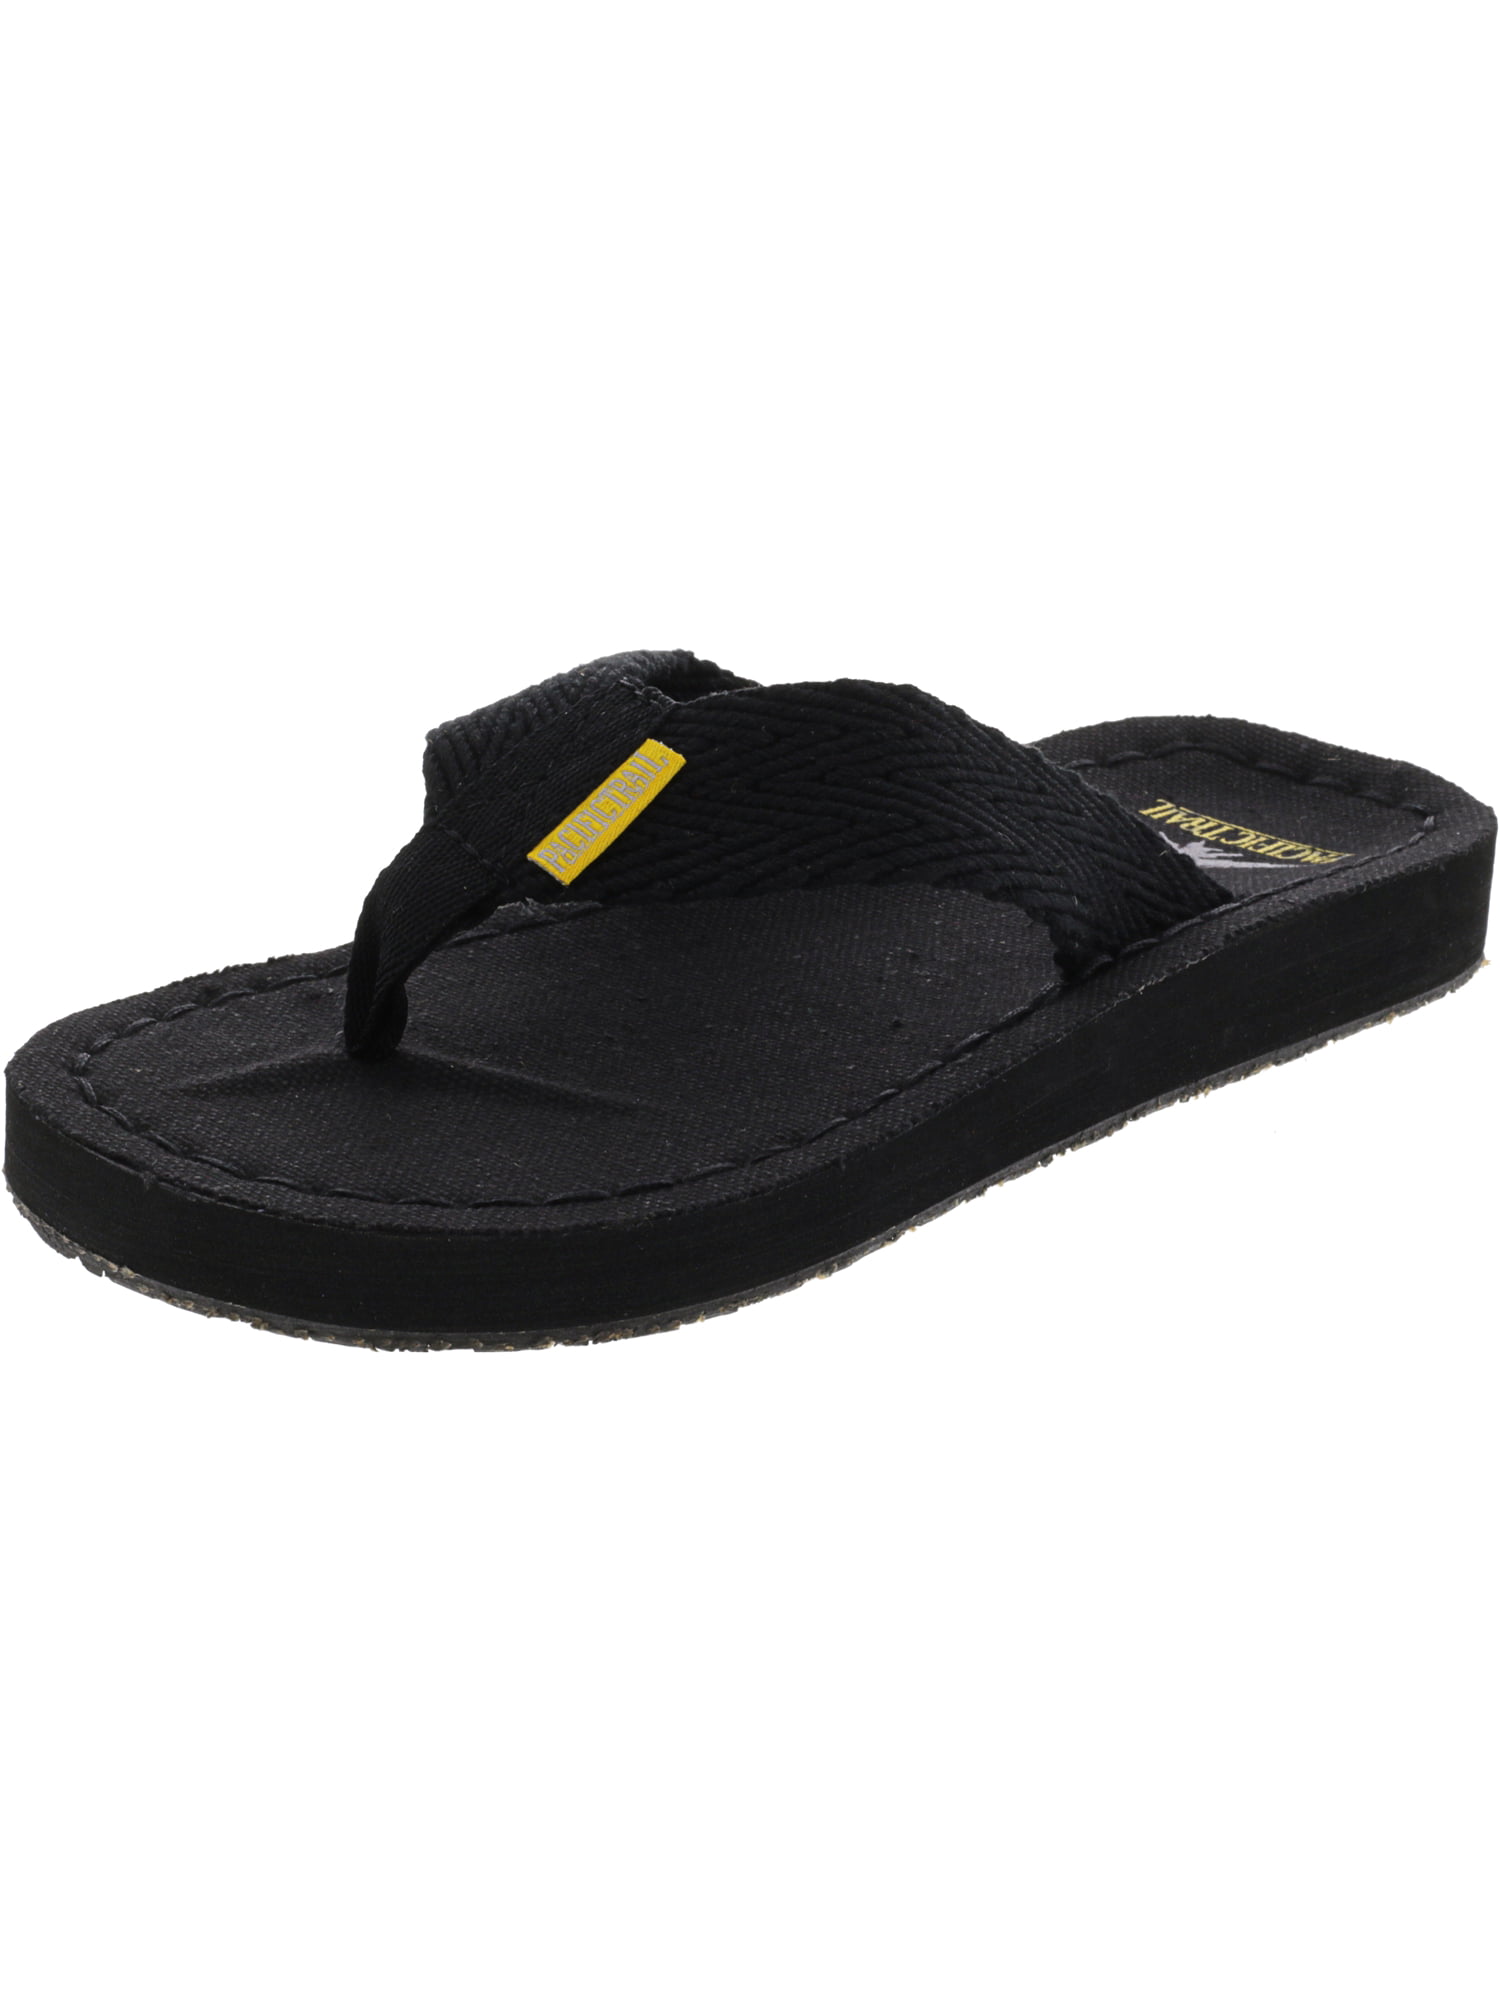 Pacific Trail Women's Woven Sandal Black / Yellow Fabric - 7M | Walmart ...